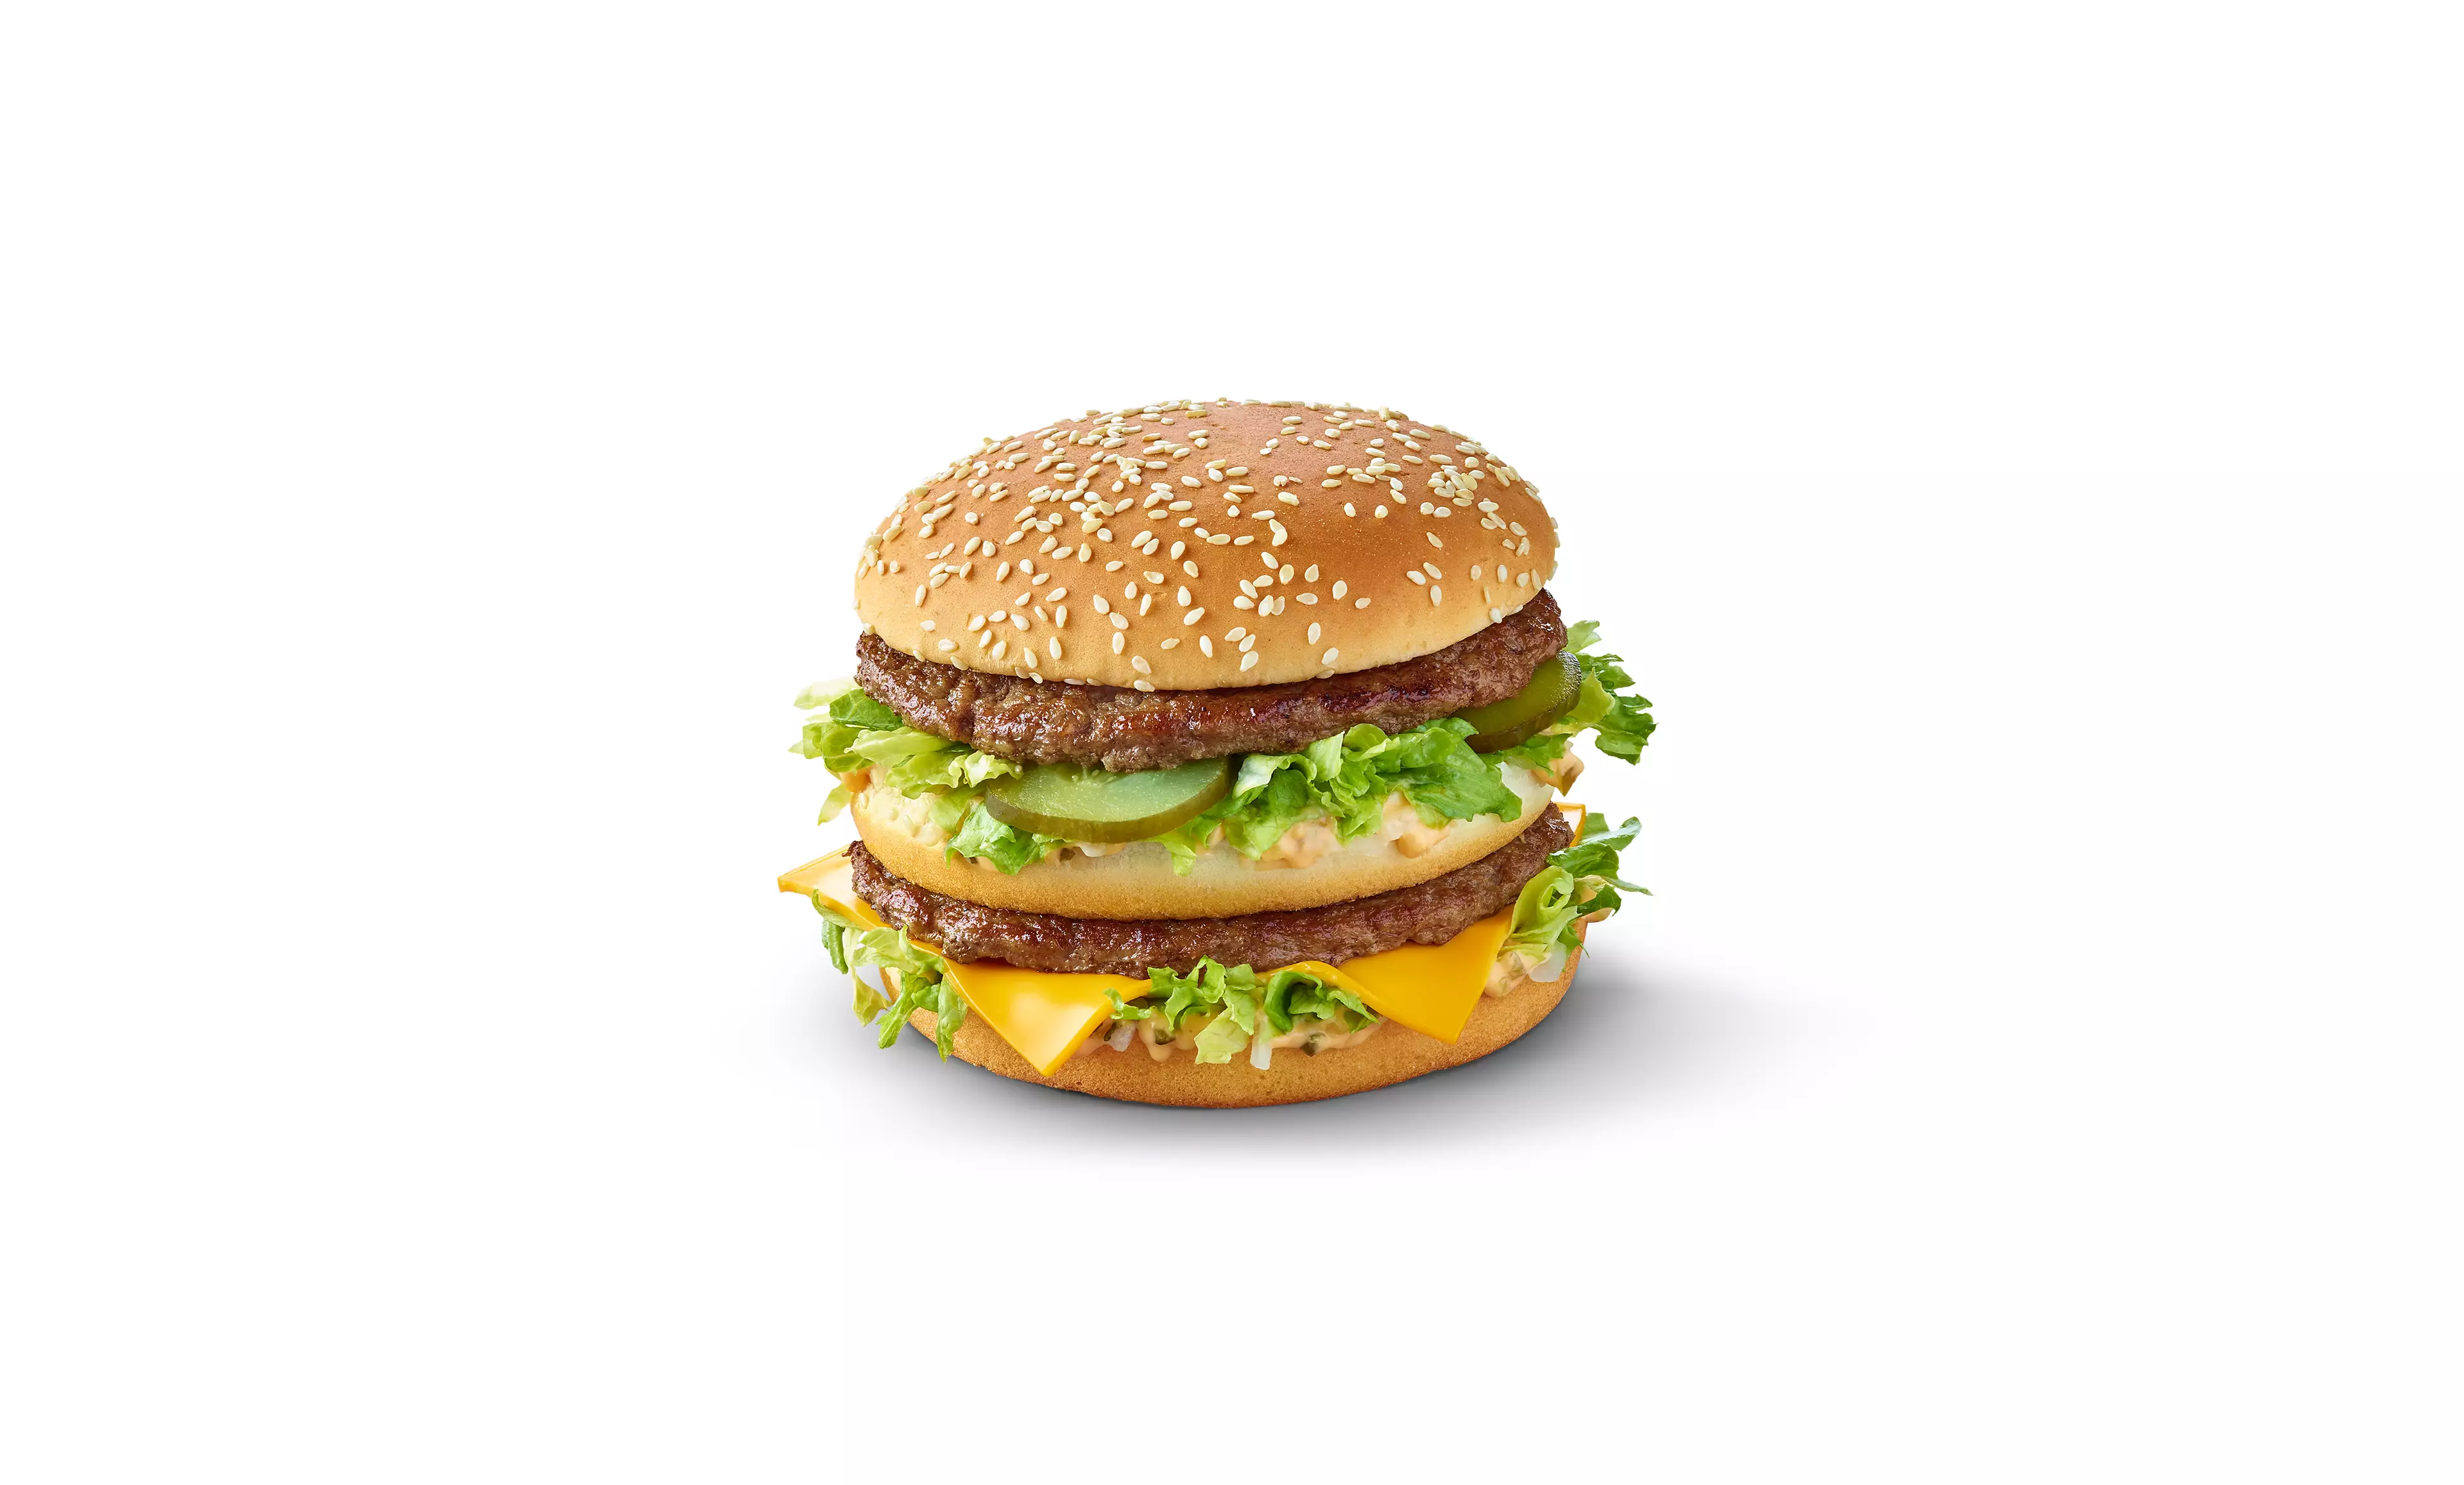 Behold the Grand Big Mac (